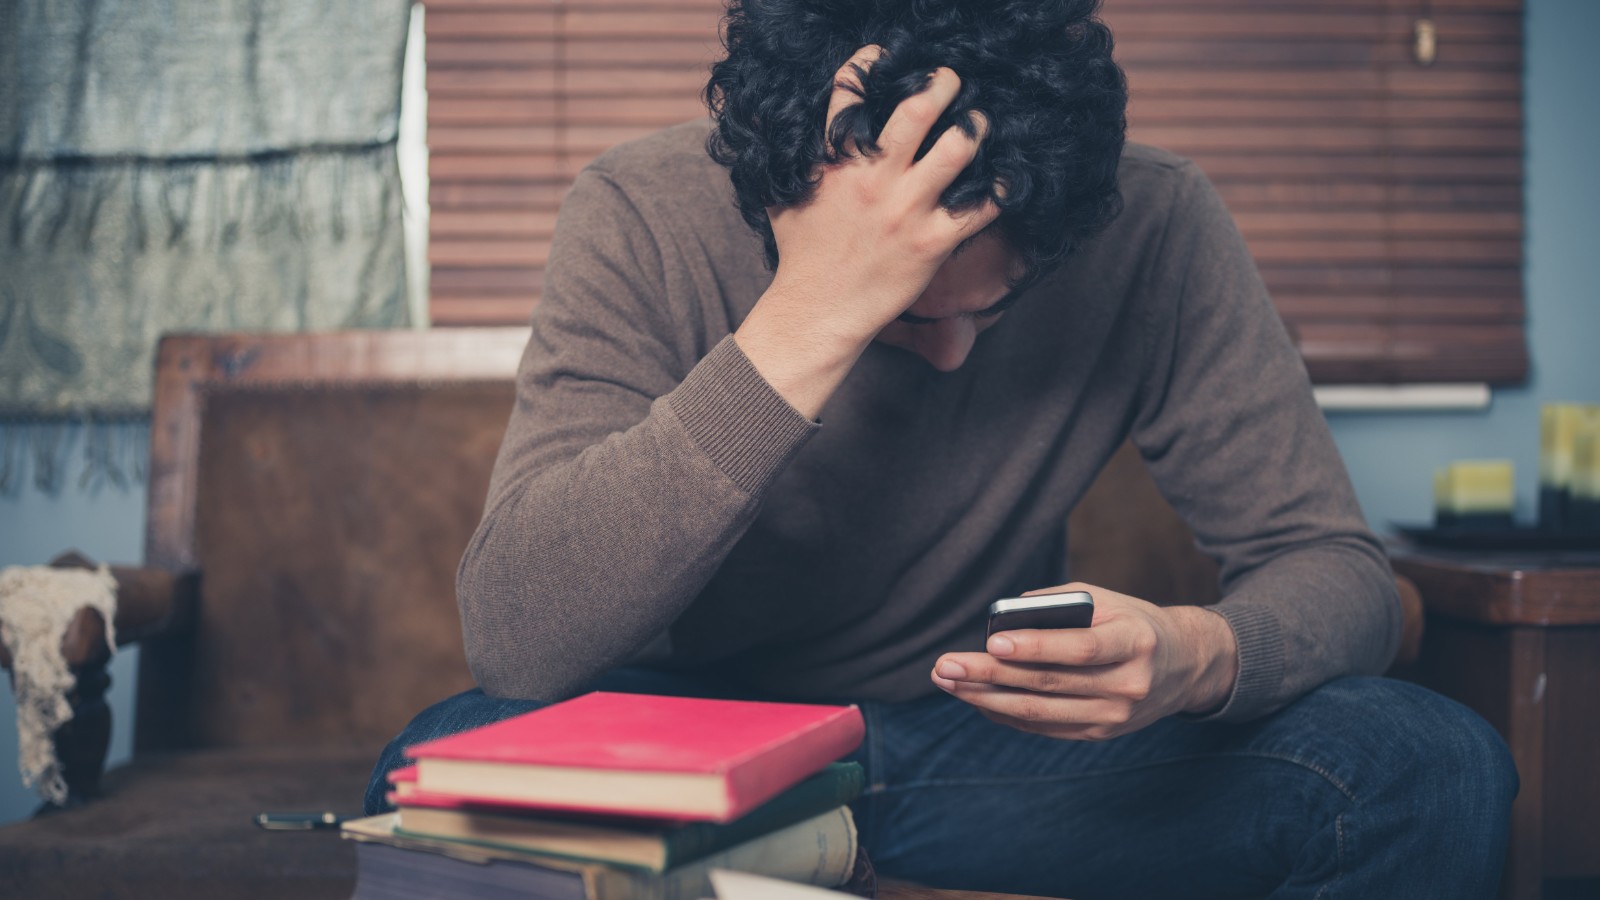 Can smartphone apps diagnosis depression? - CNN